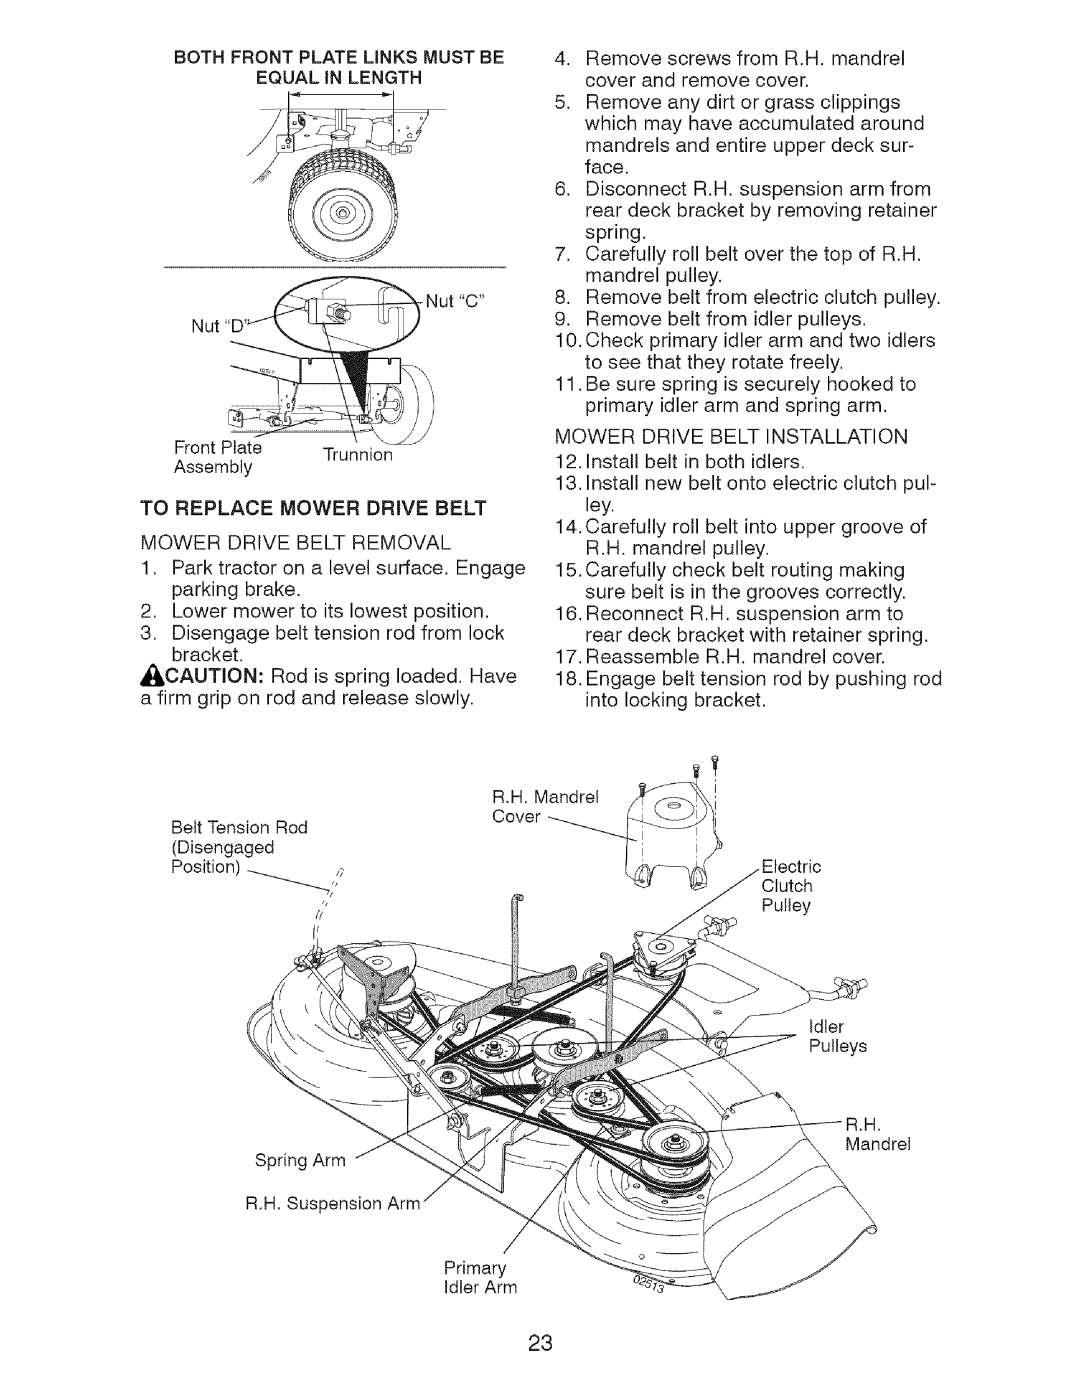 Craftsman 917.2759 manual To Replace Mower Drive Belt 